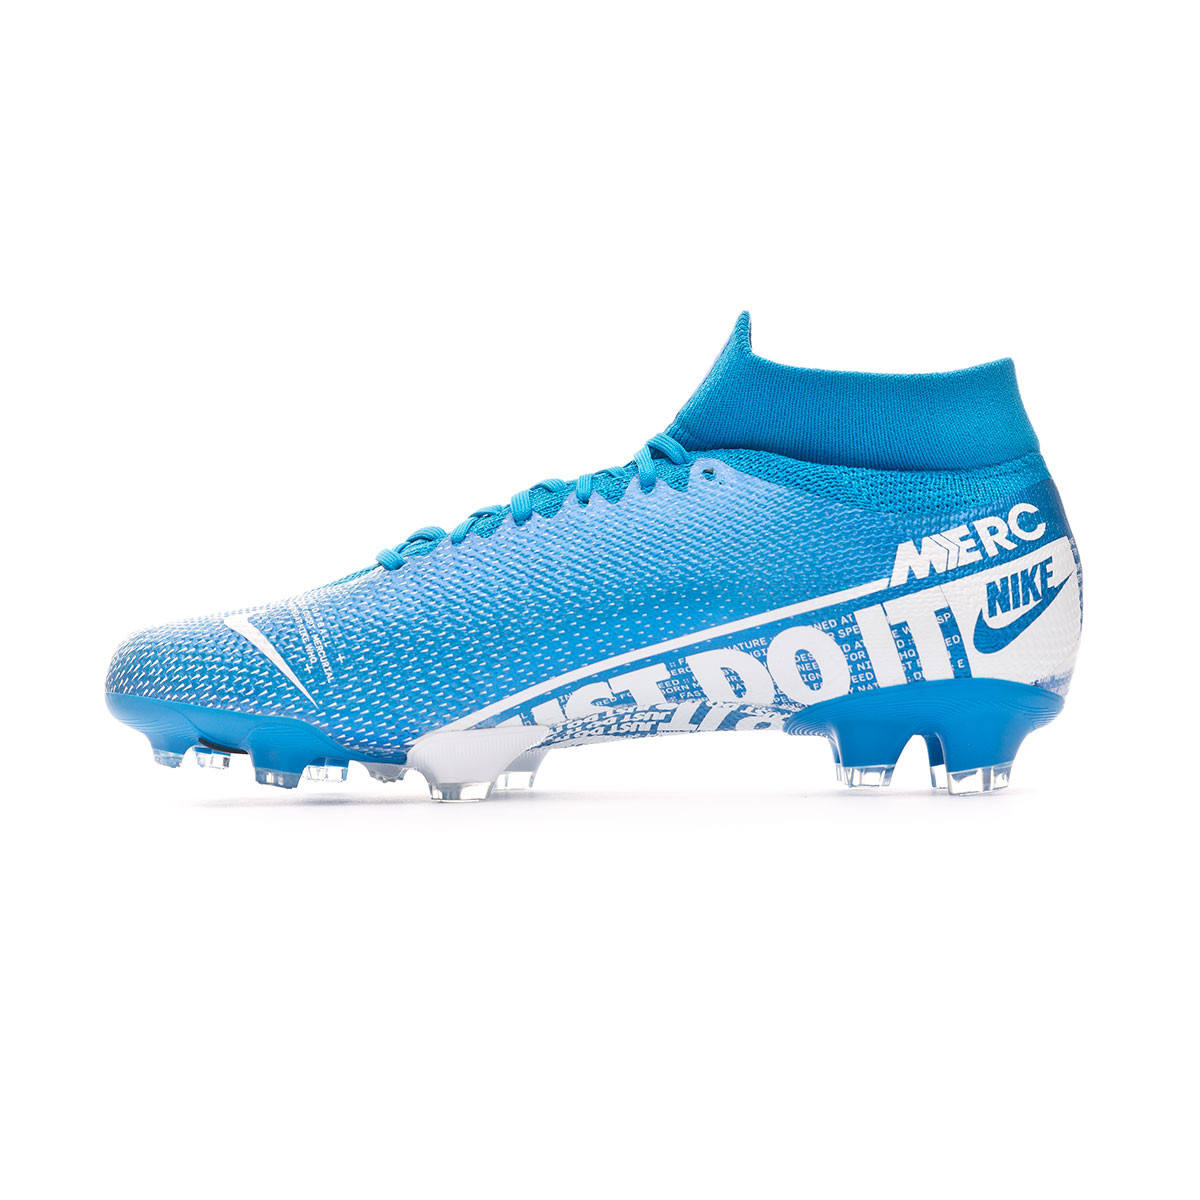 Bota de fútbol Nike Mercurial Superfly VII Pro FG Blue hero-White-Obsidian  - Tienda de fútbol Fútbol Emotion